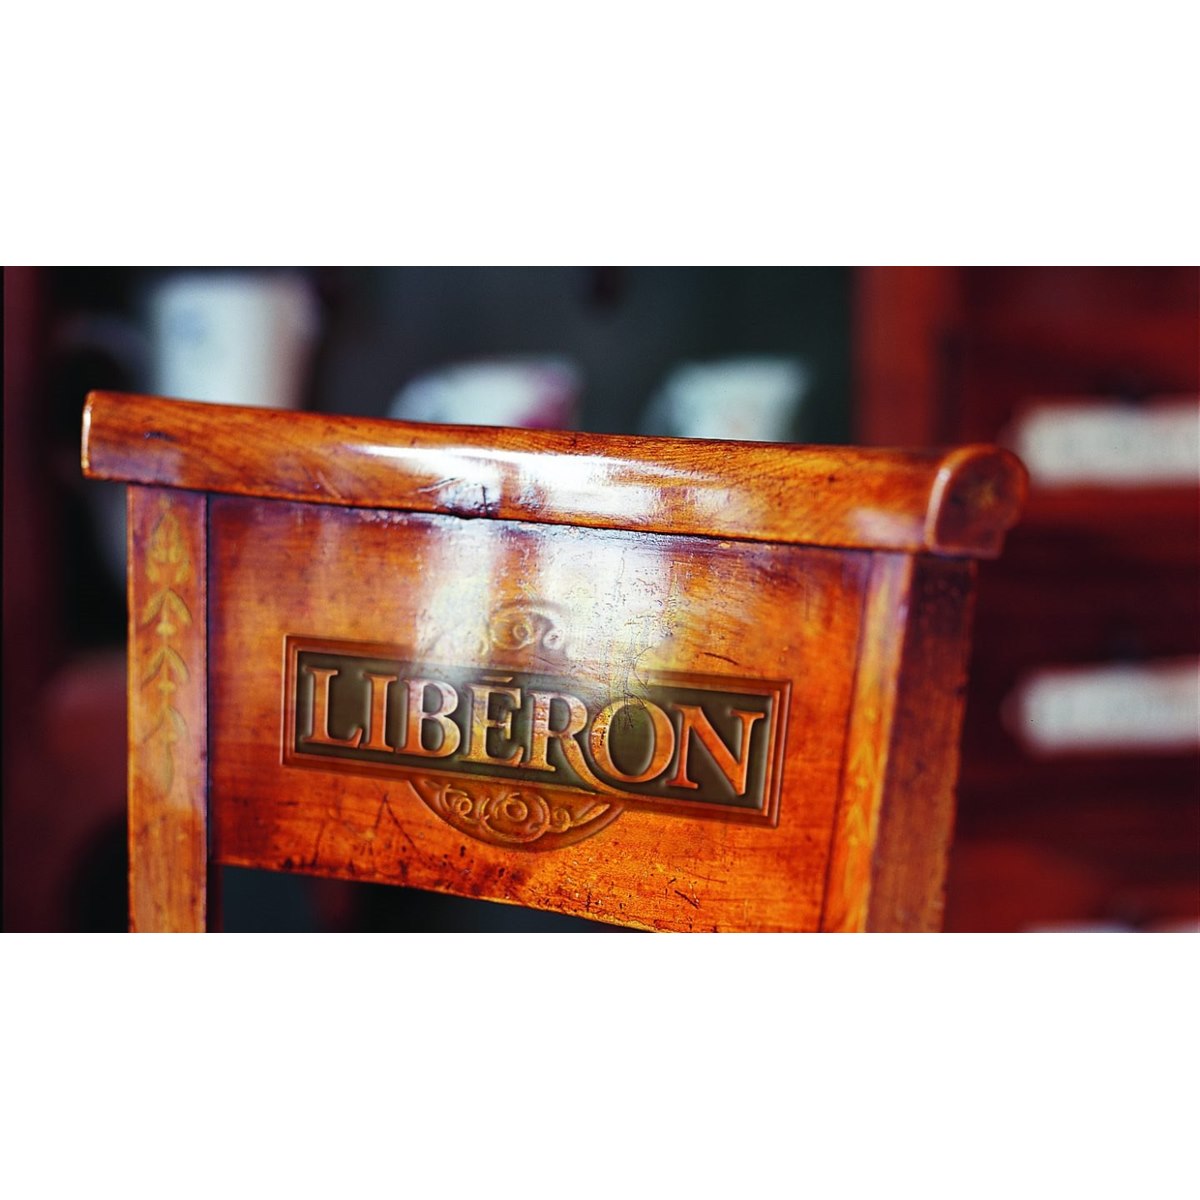 Where to buy Liberon Black Bison Wax